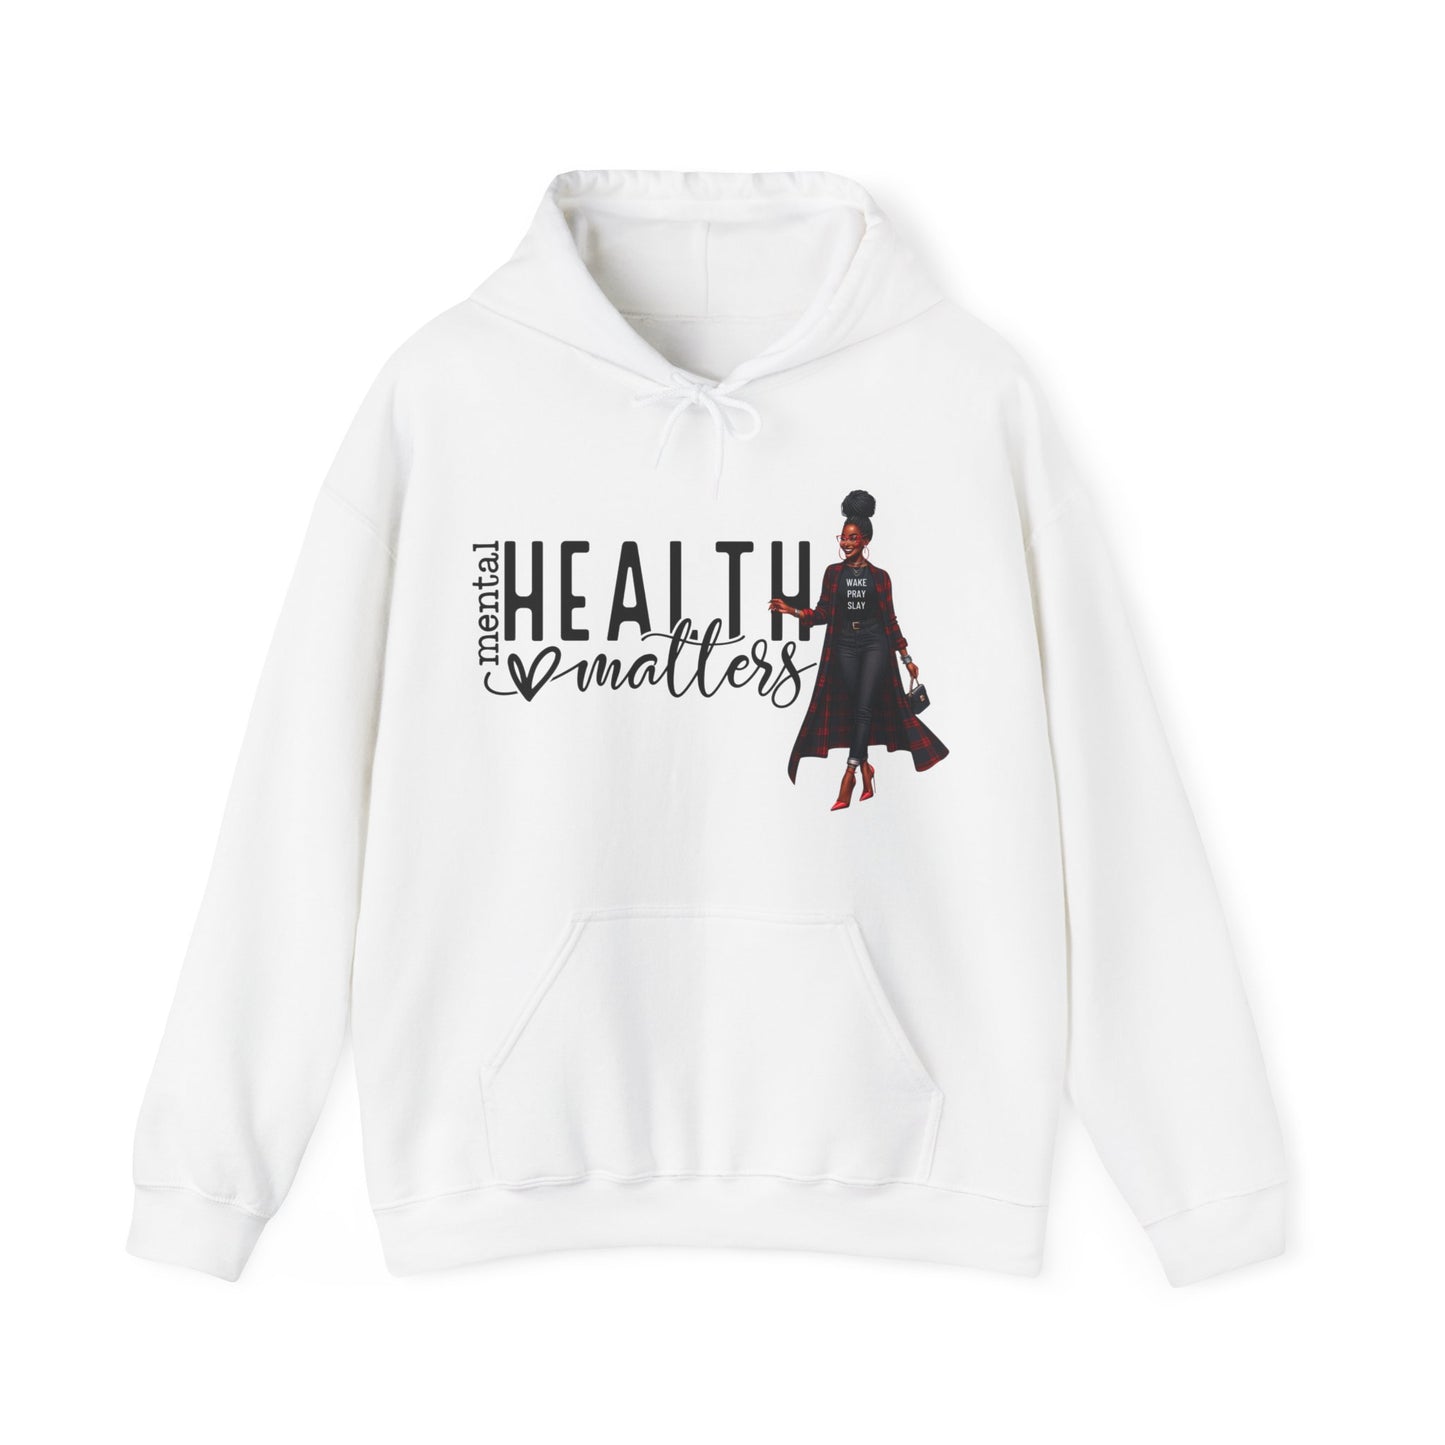 Her Mental Health Matters Hooded Sweatshirt